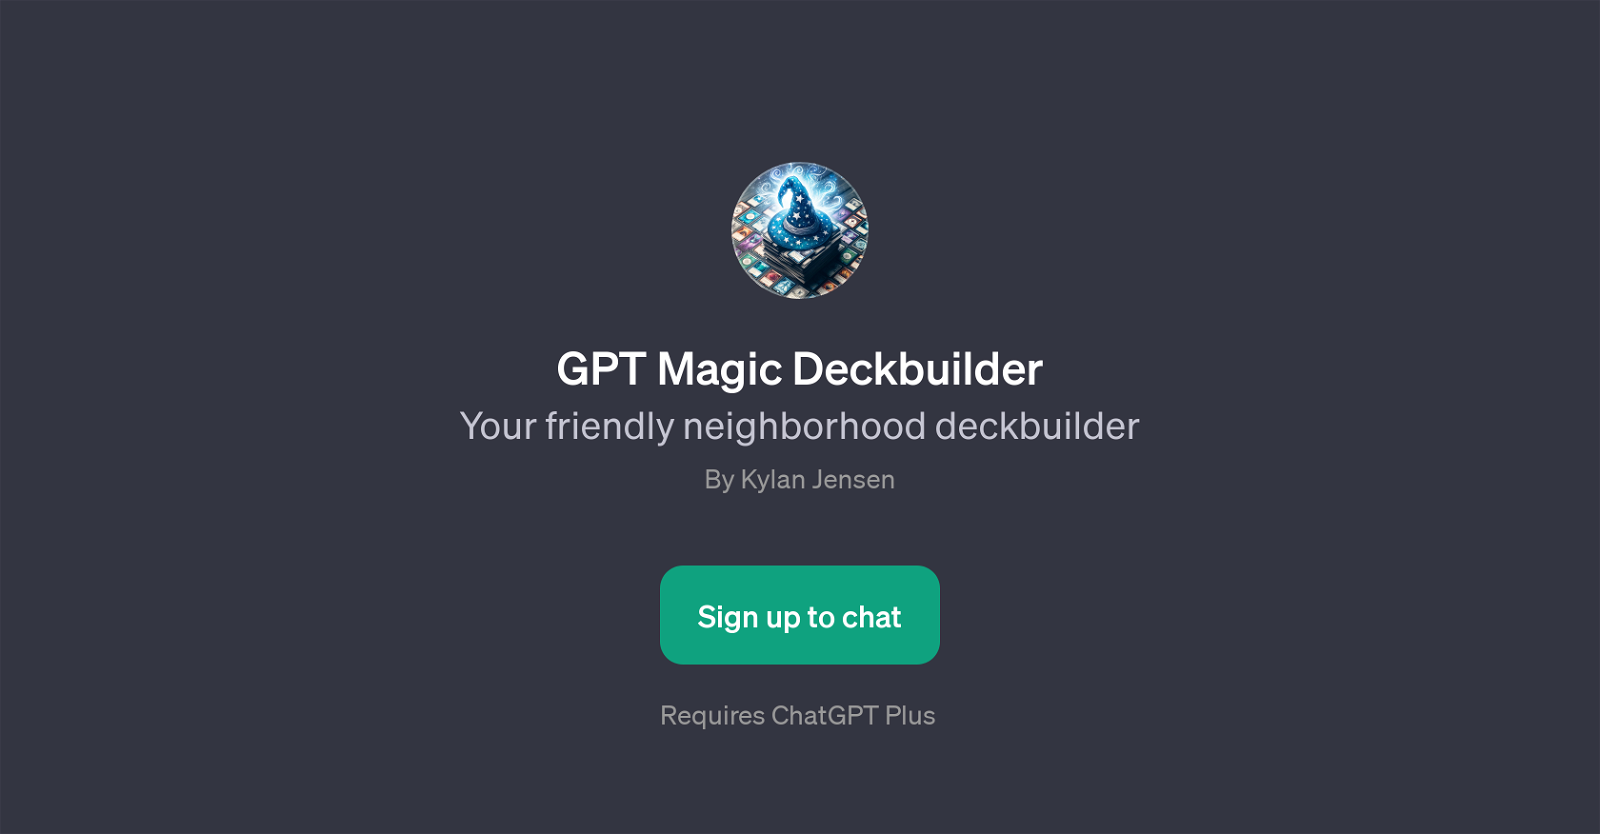 GPT Magic Deckbuilder website